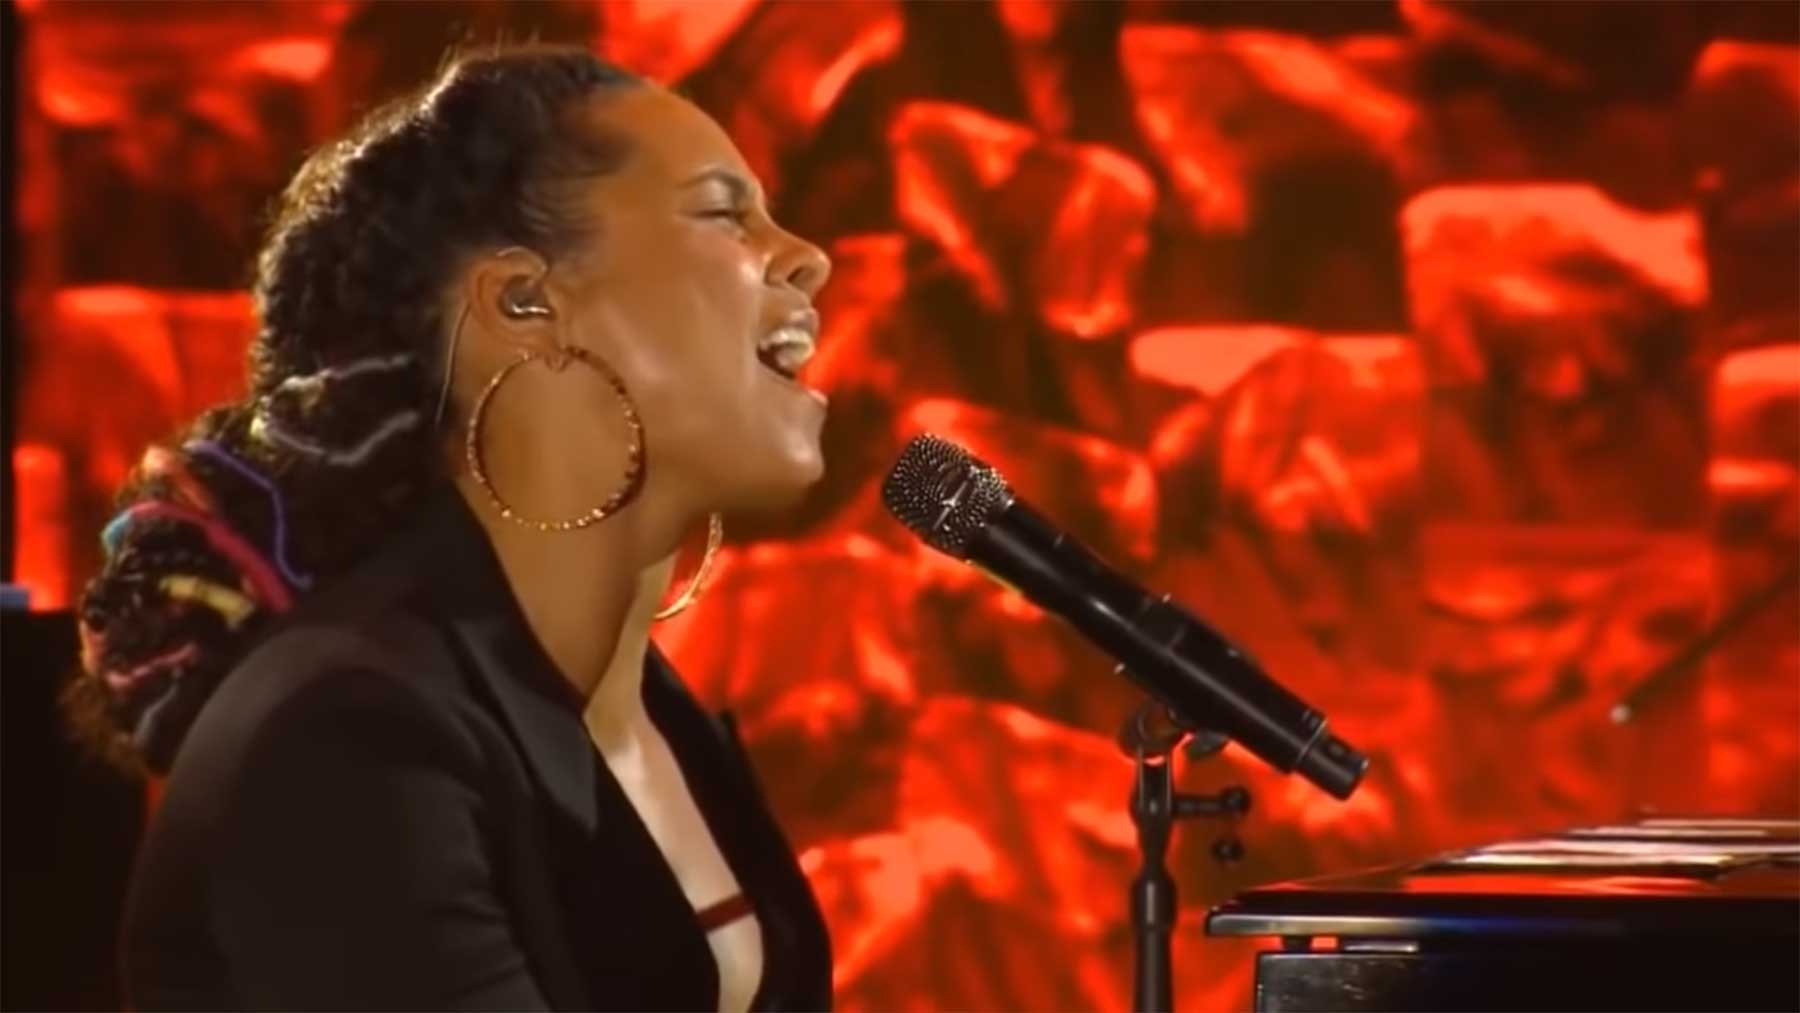 Alicia Keys covert Jay-Z-Songs am Klavier